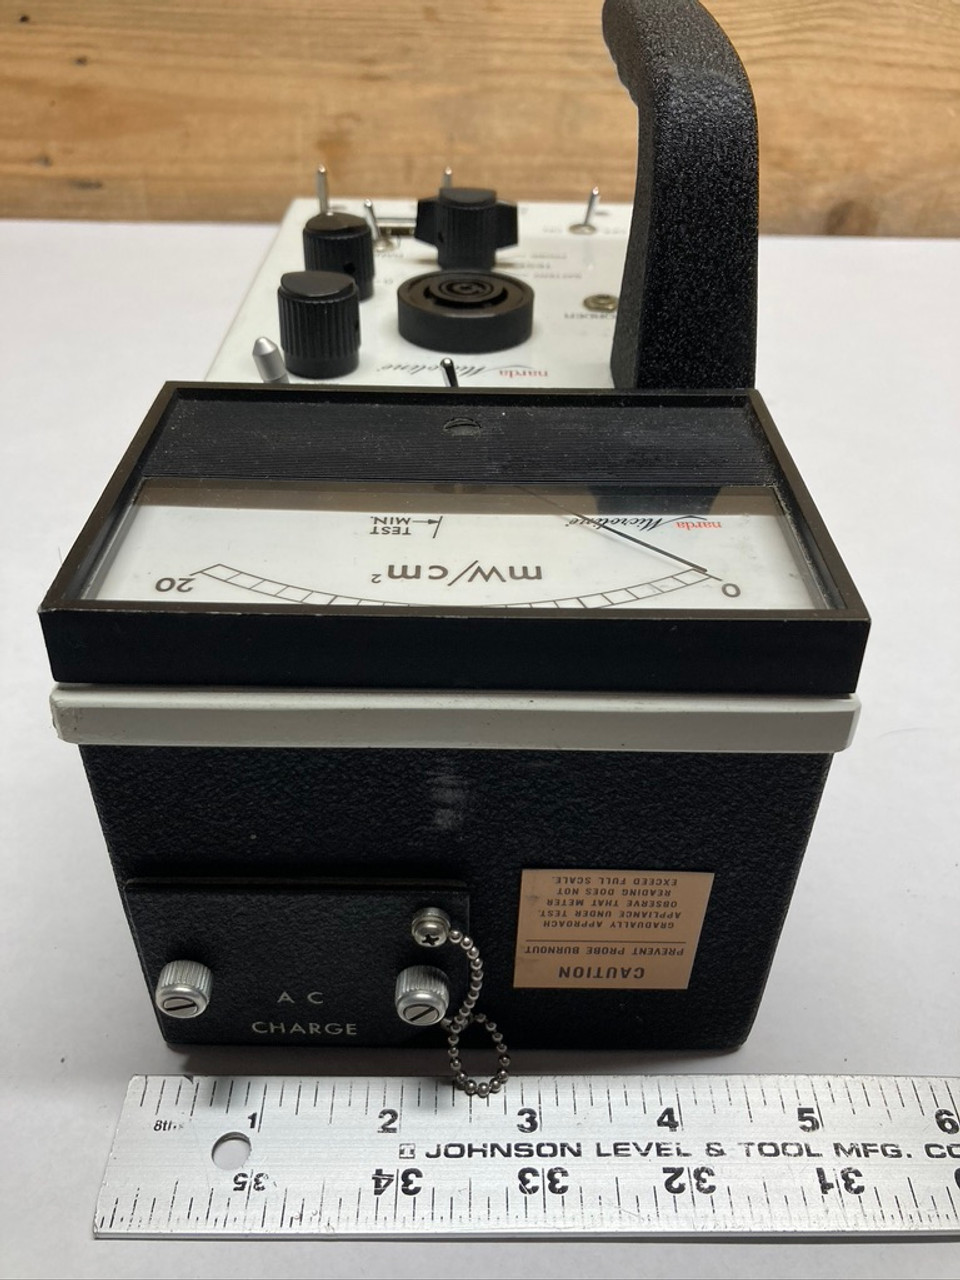 Narda Micro-Line 8110 Electromagnetic Radiation Monitor